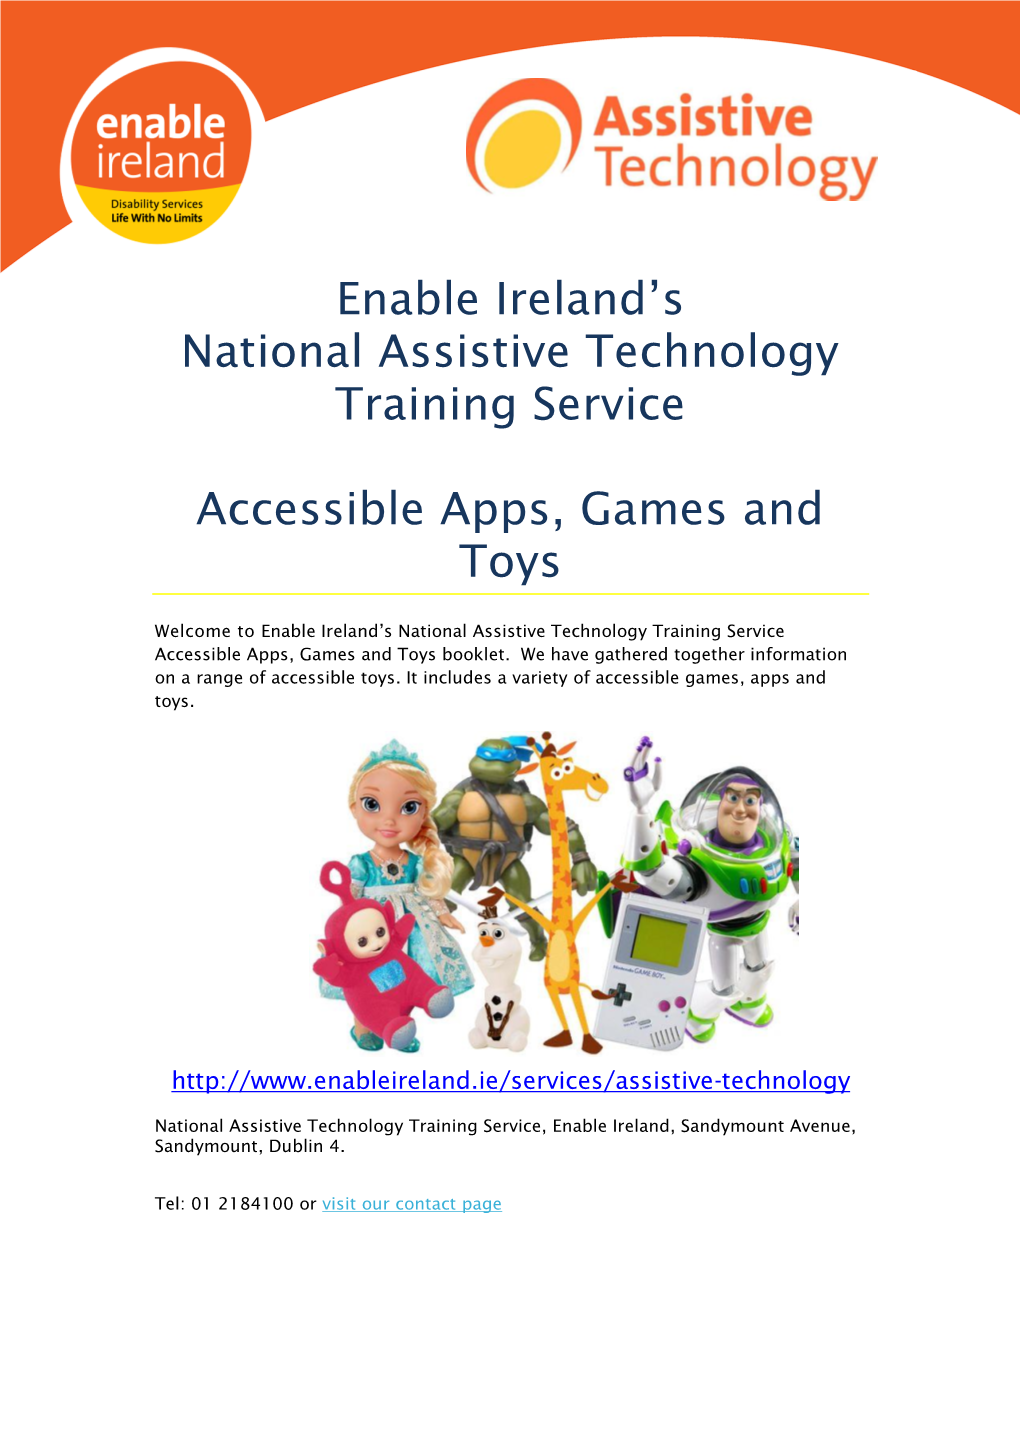 Enable Ireland's National Assistive Technology Training Service